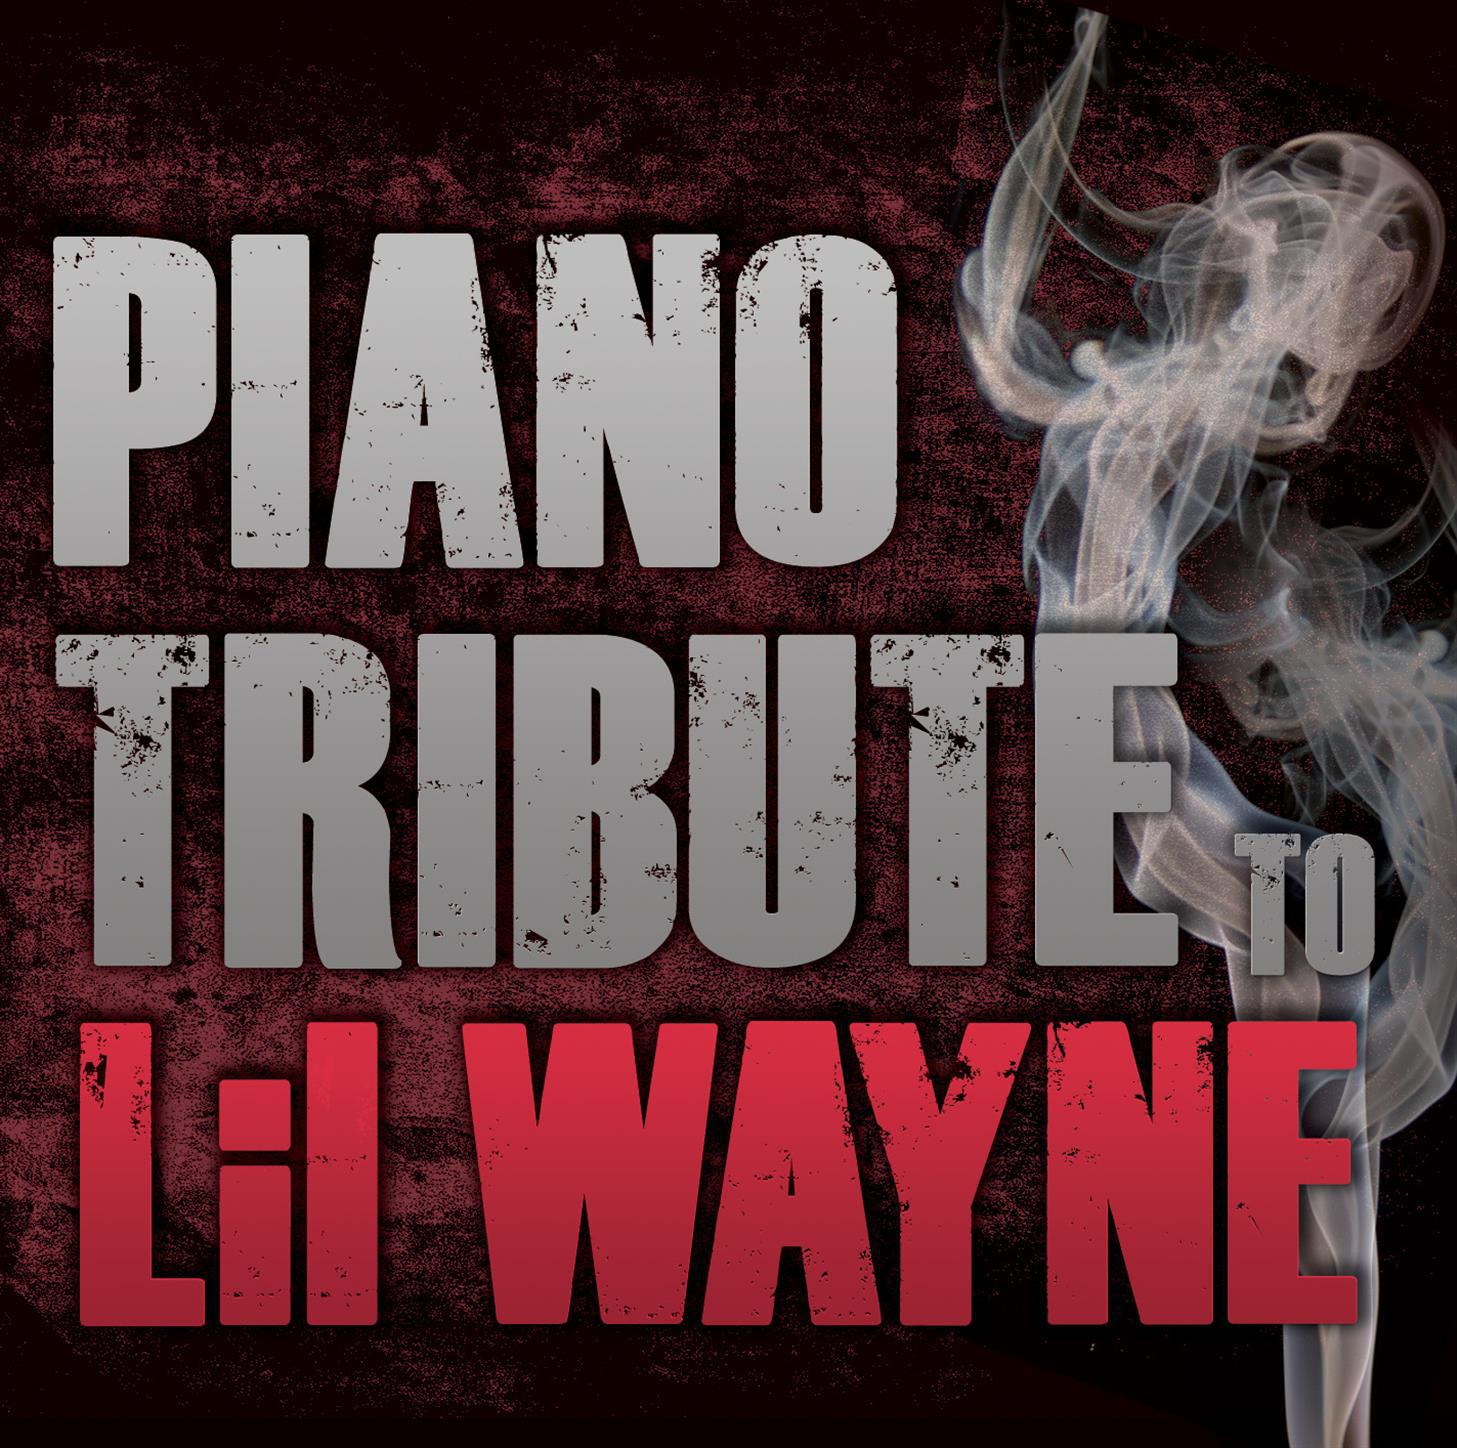 Piano Tribute to Lil Wayne专辑